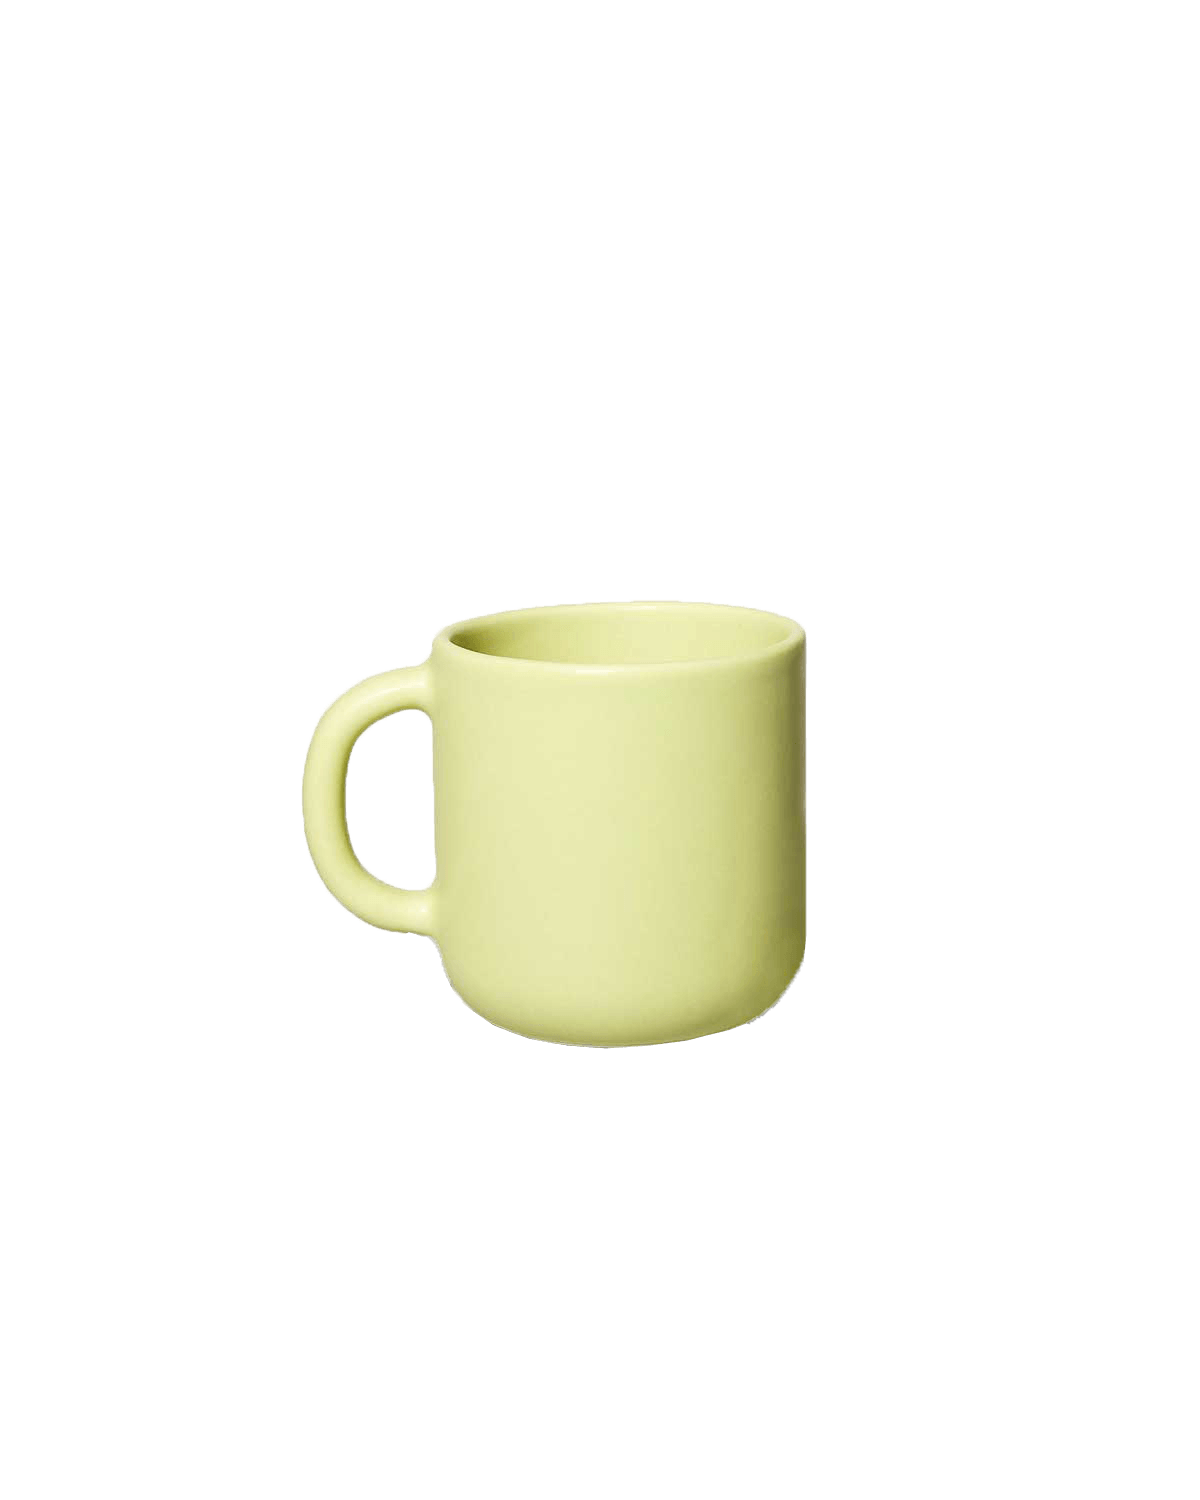 Felt + Fat Coffee Mug in Honeydew Green - Ordinary Habit